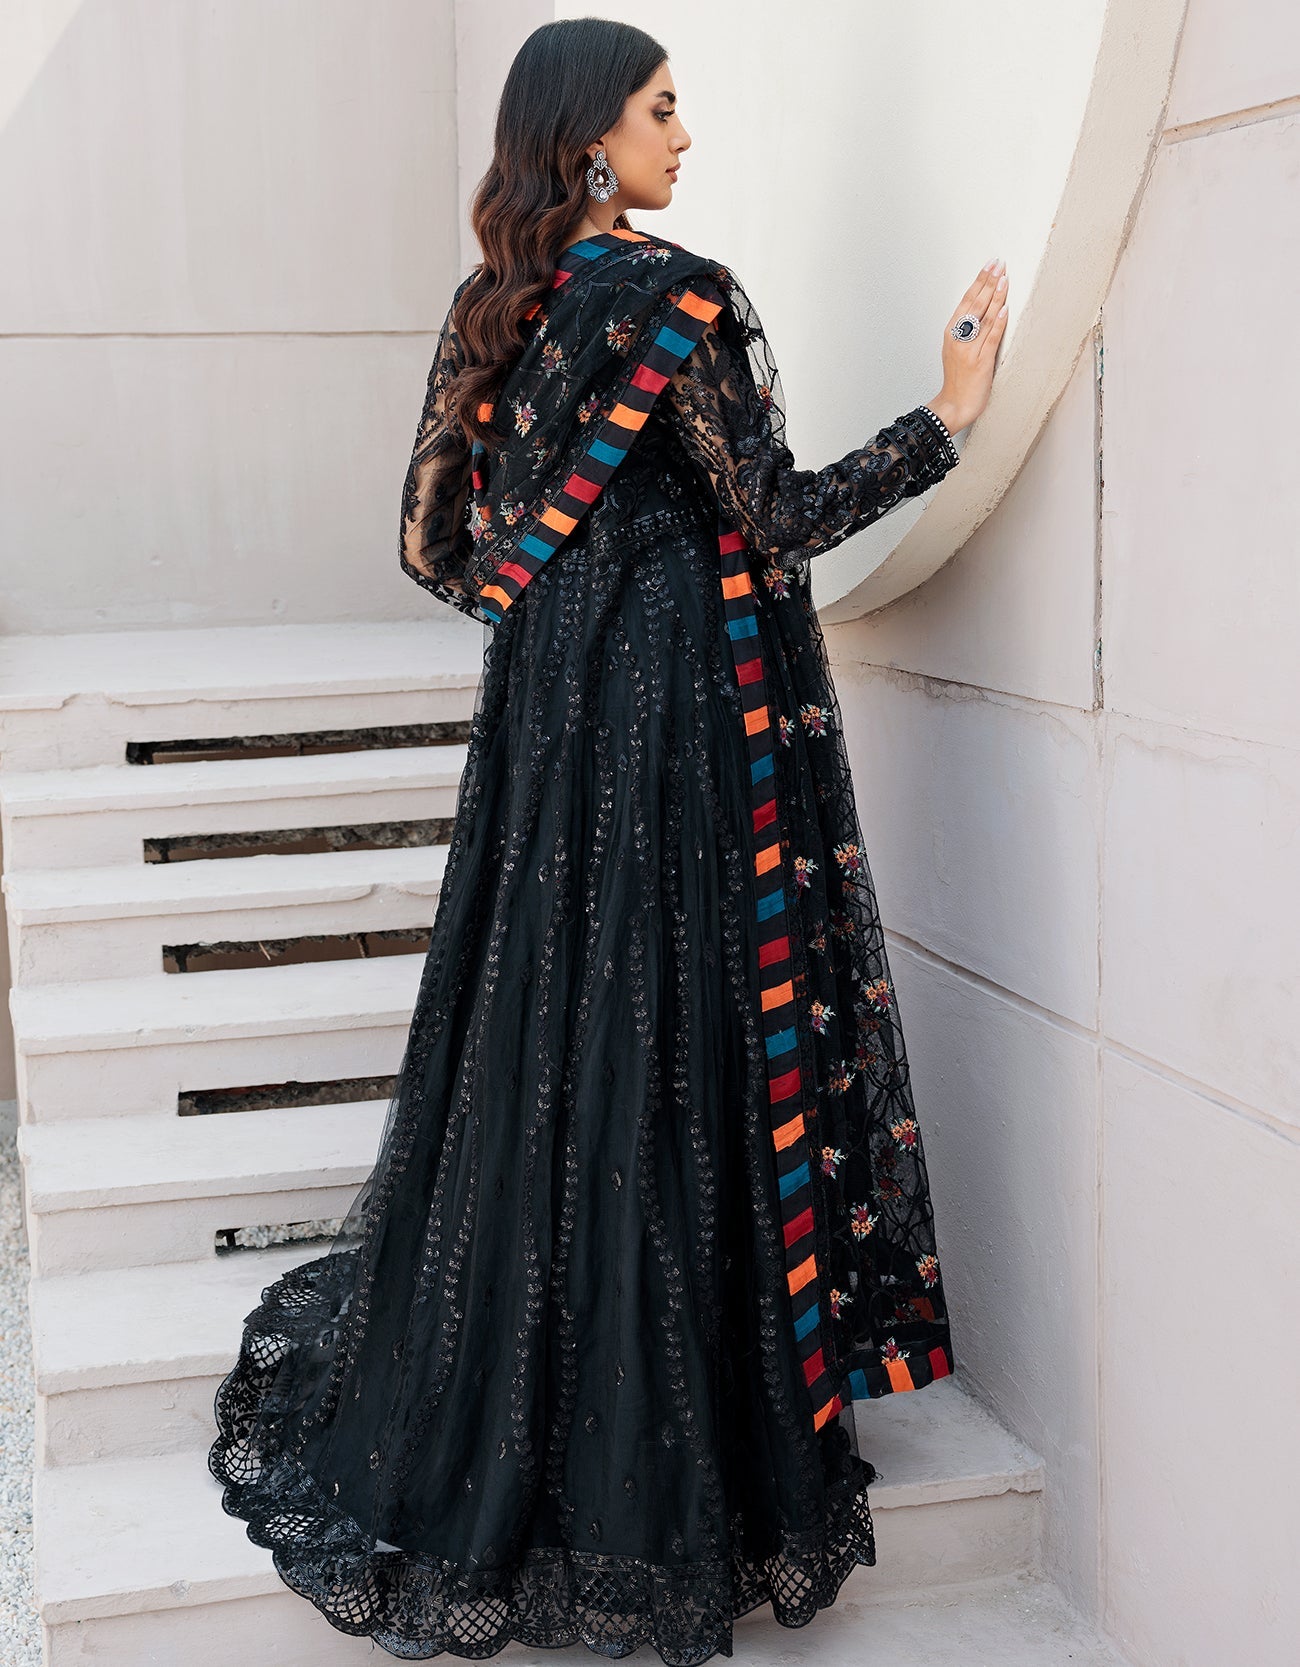 Belle Robe by Emaan Adeel (BL-502)